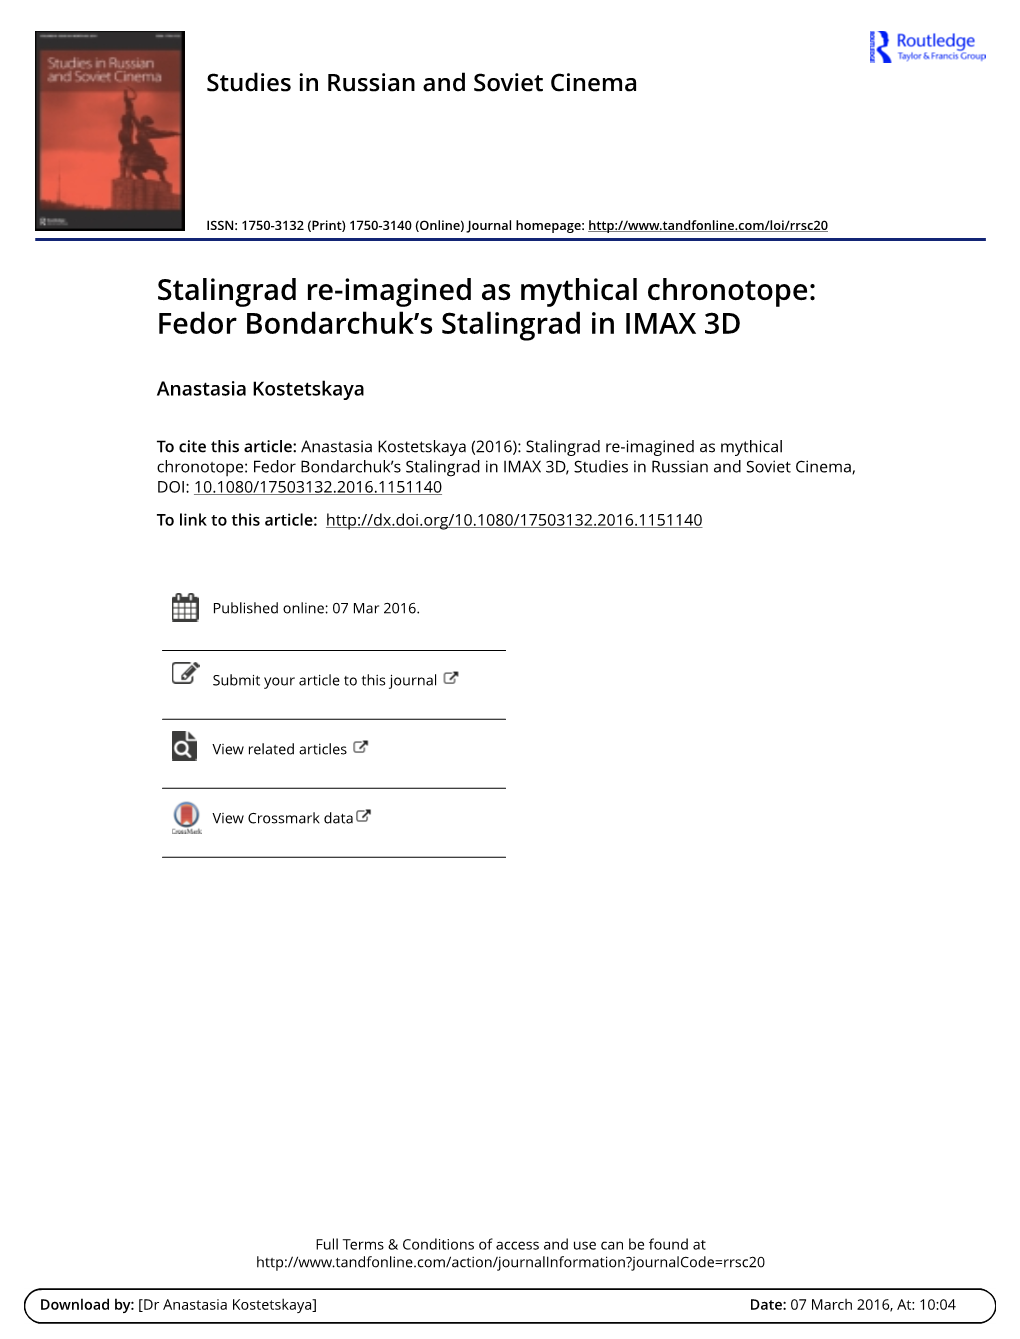 Stalingrad Re-Imagined As Mythical Chronotope: Fedor Bondarchuk's Stalingrad in IMAX 3D